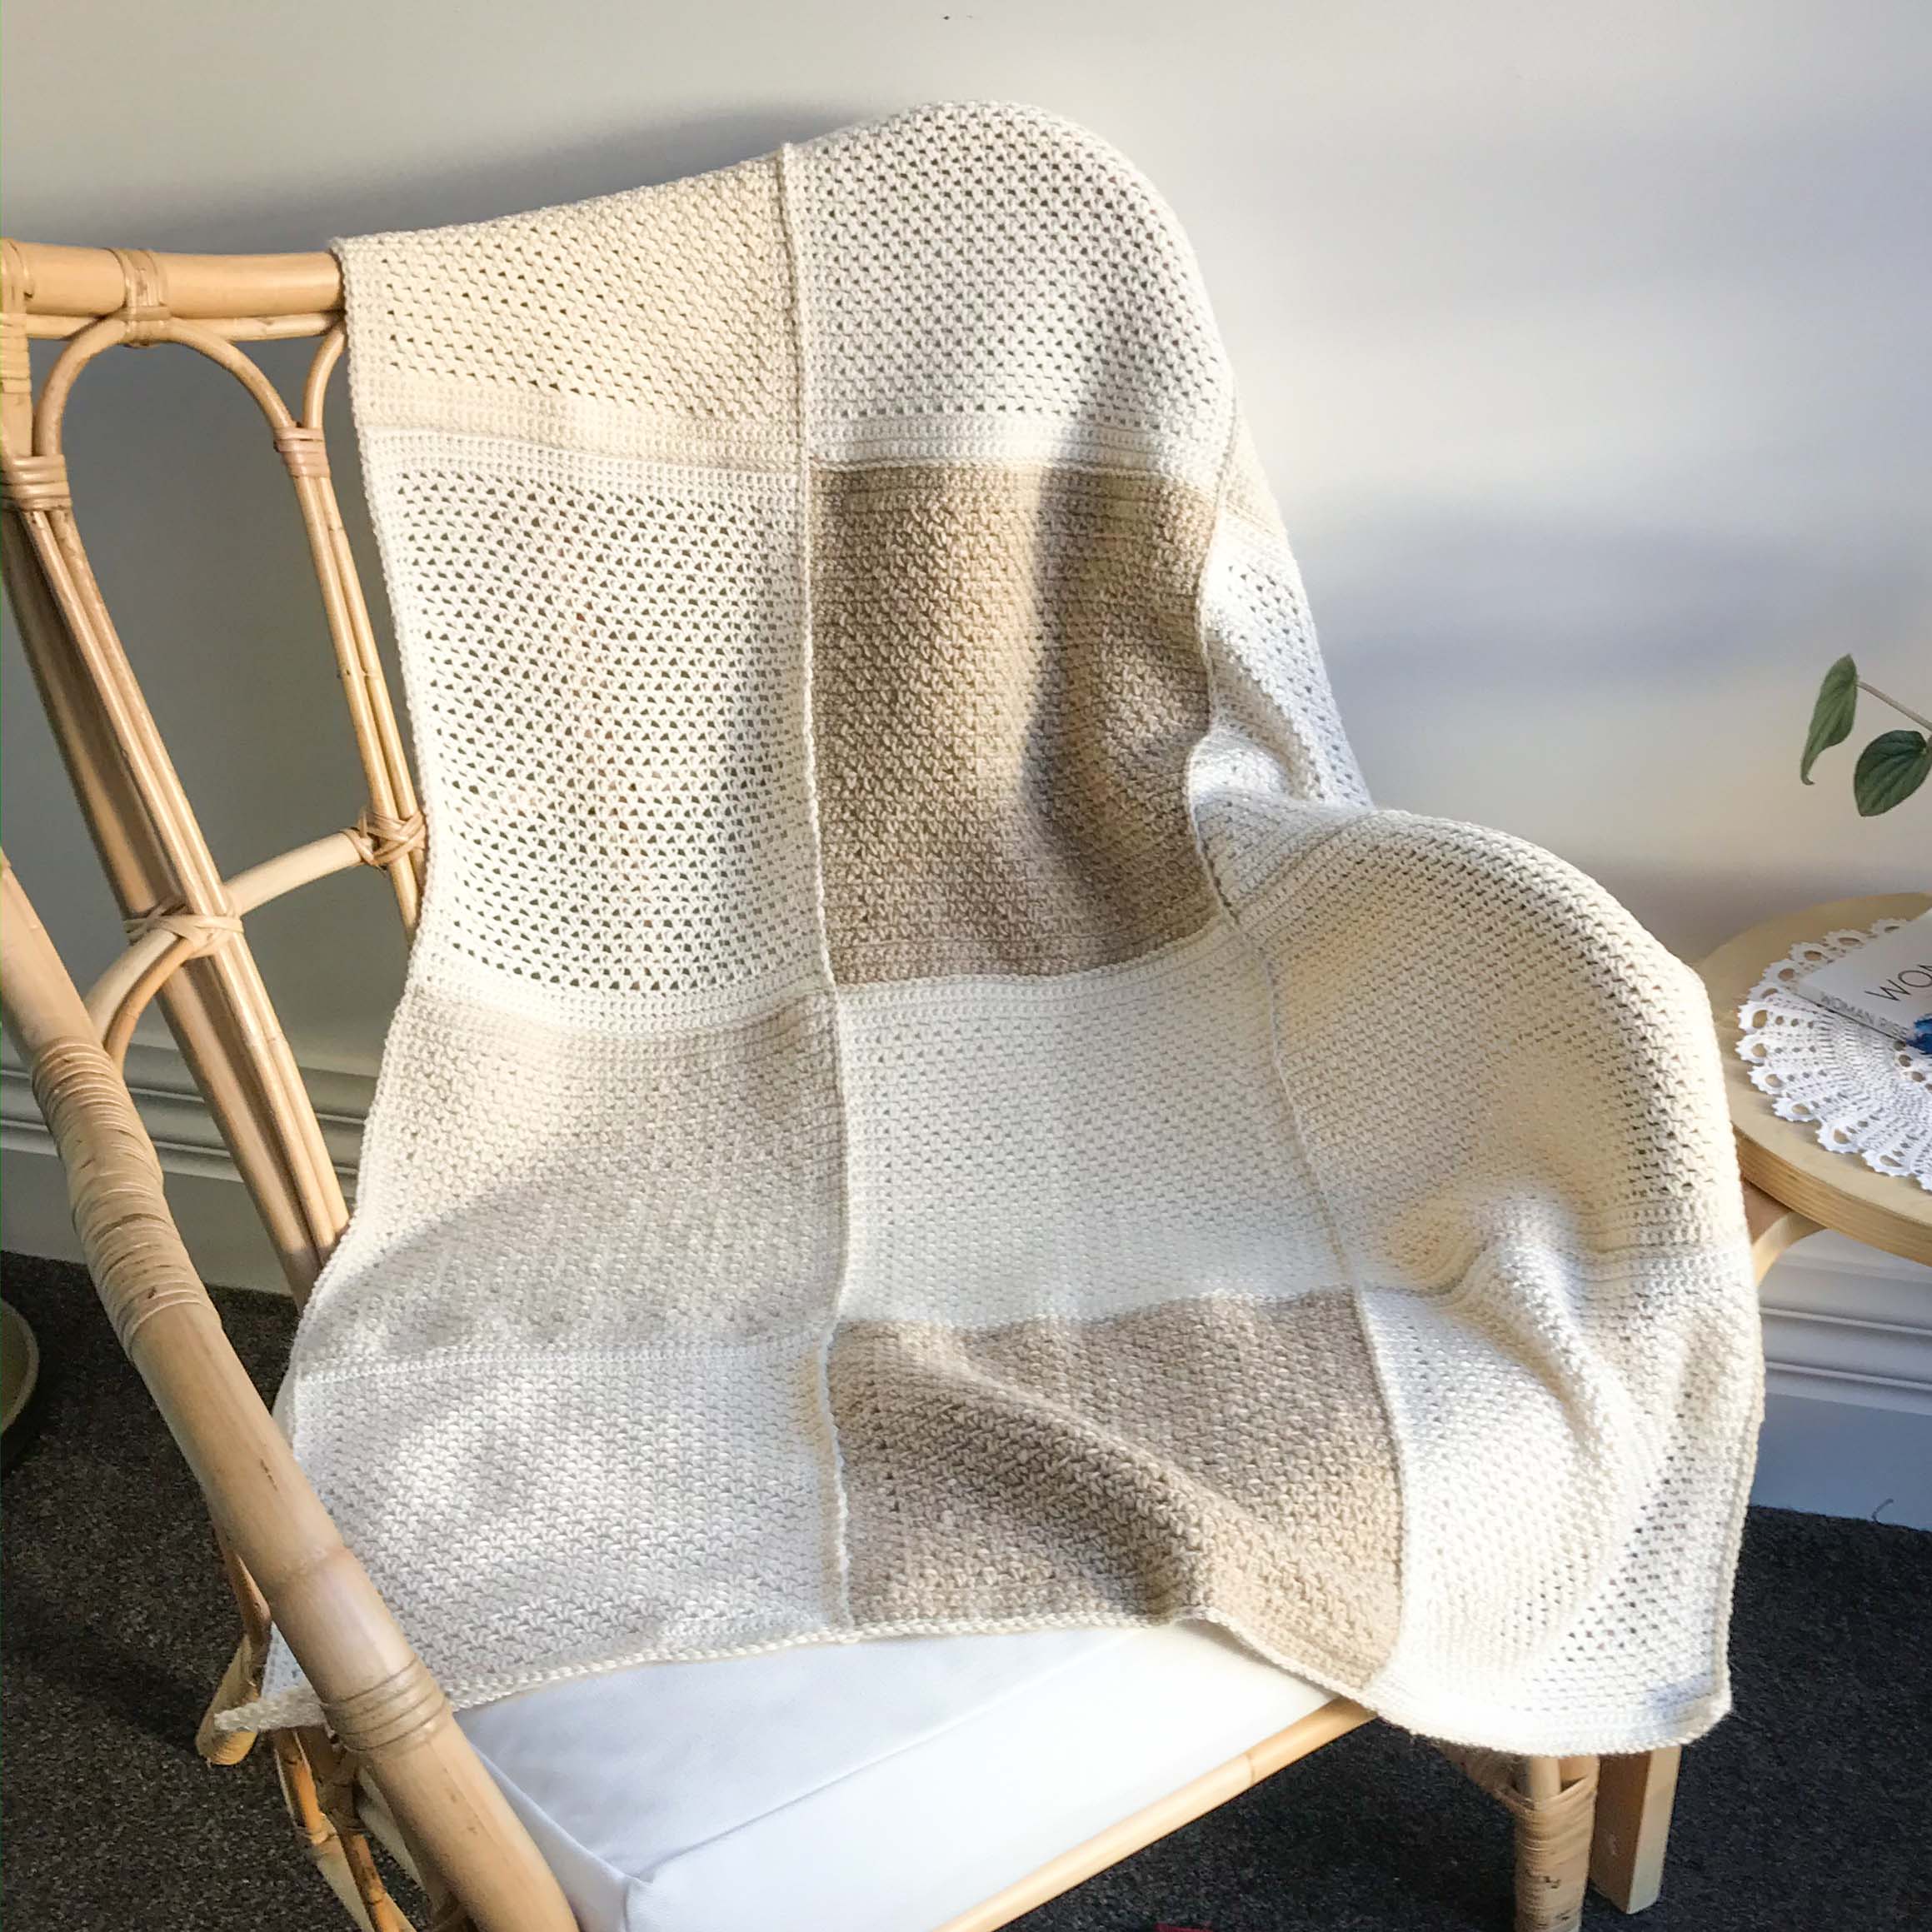 Fibre Exploration Blanket – Homelea Lass contemporary crochet